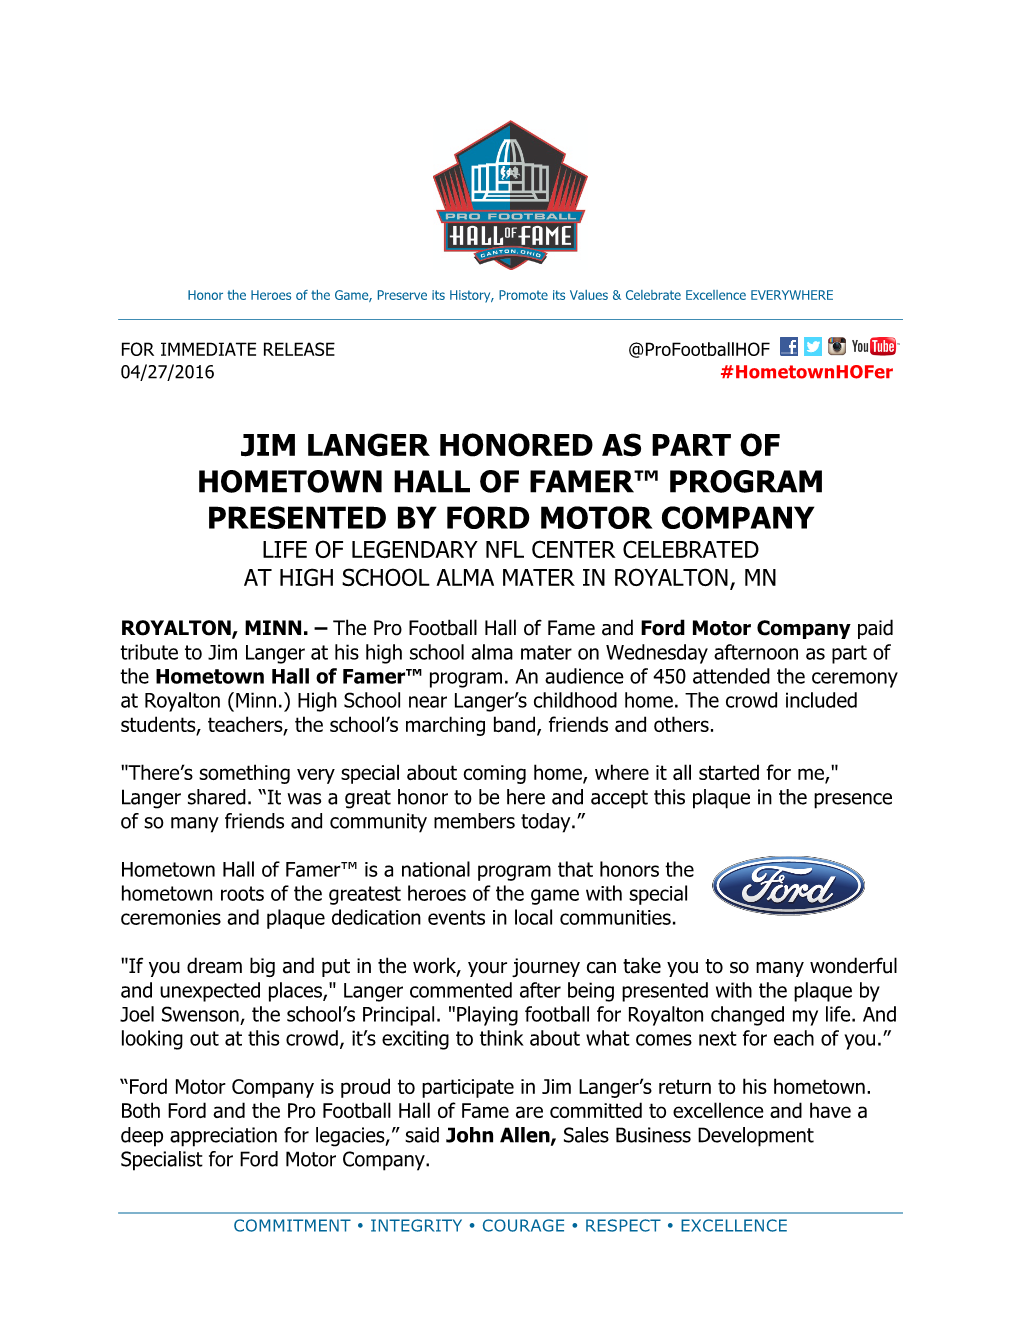 Jim Langer Honored As Part of Hometown Hall of Famer